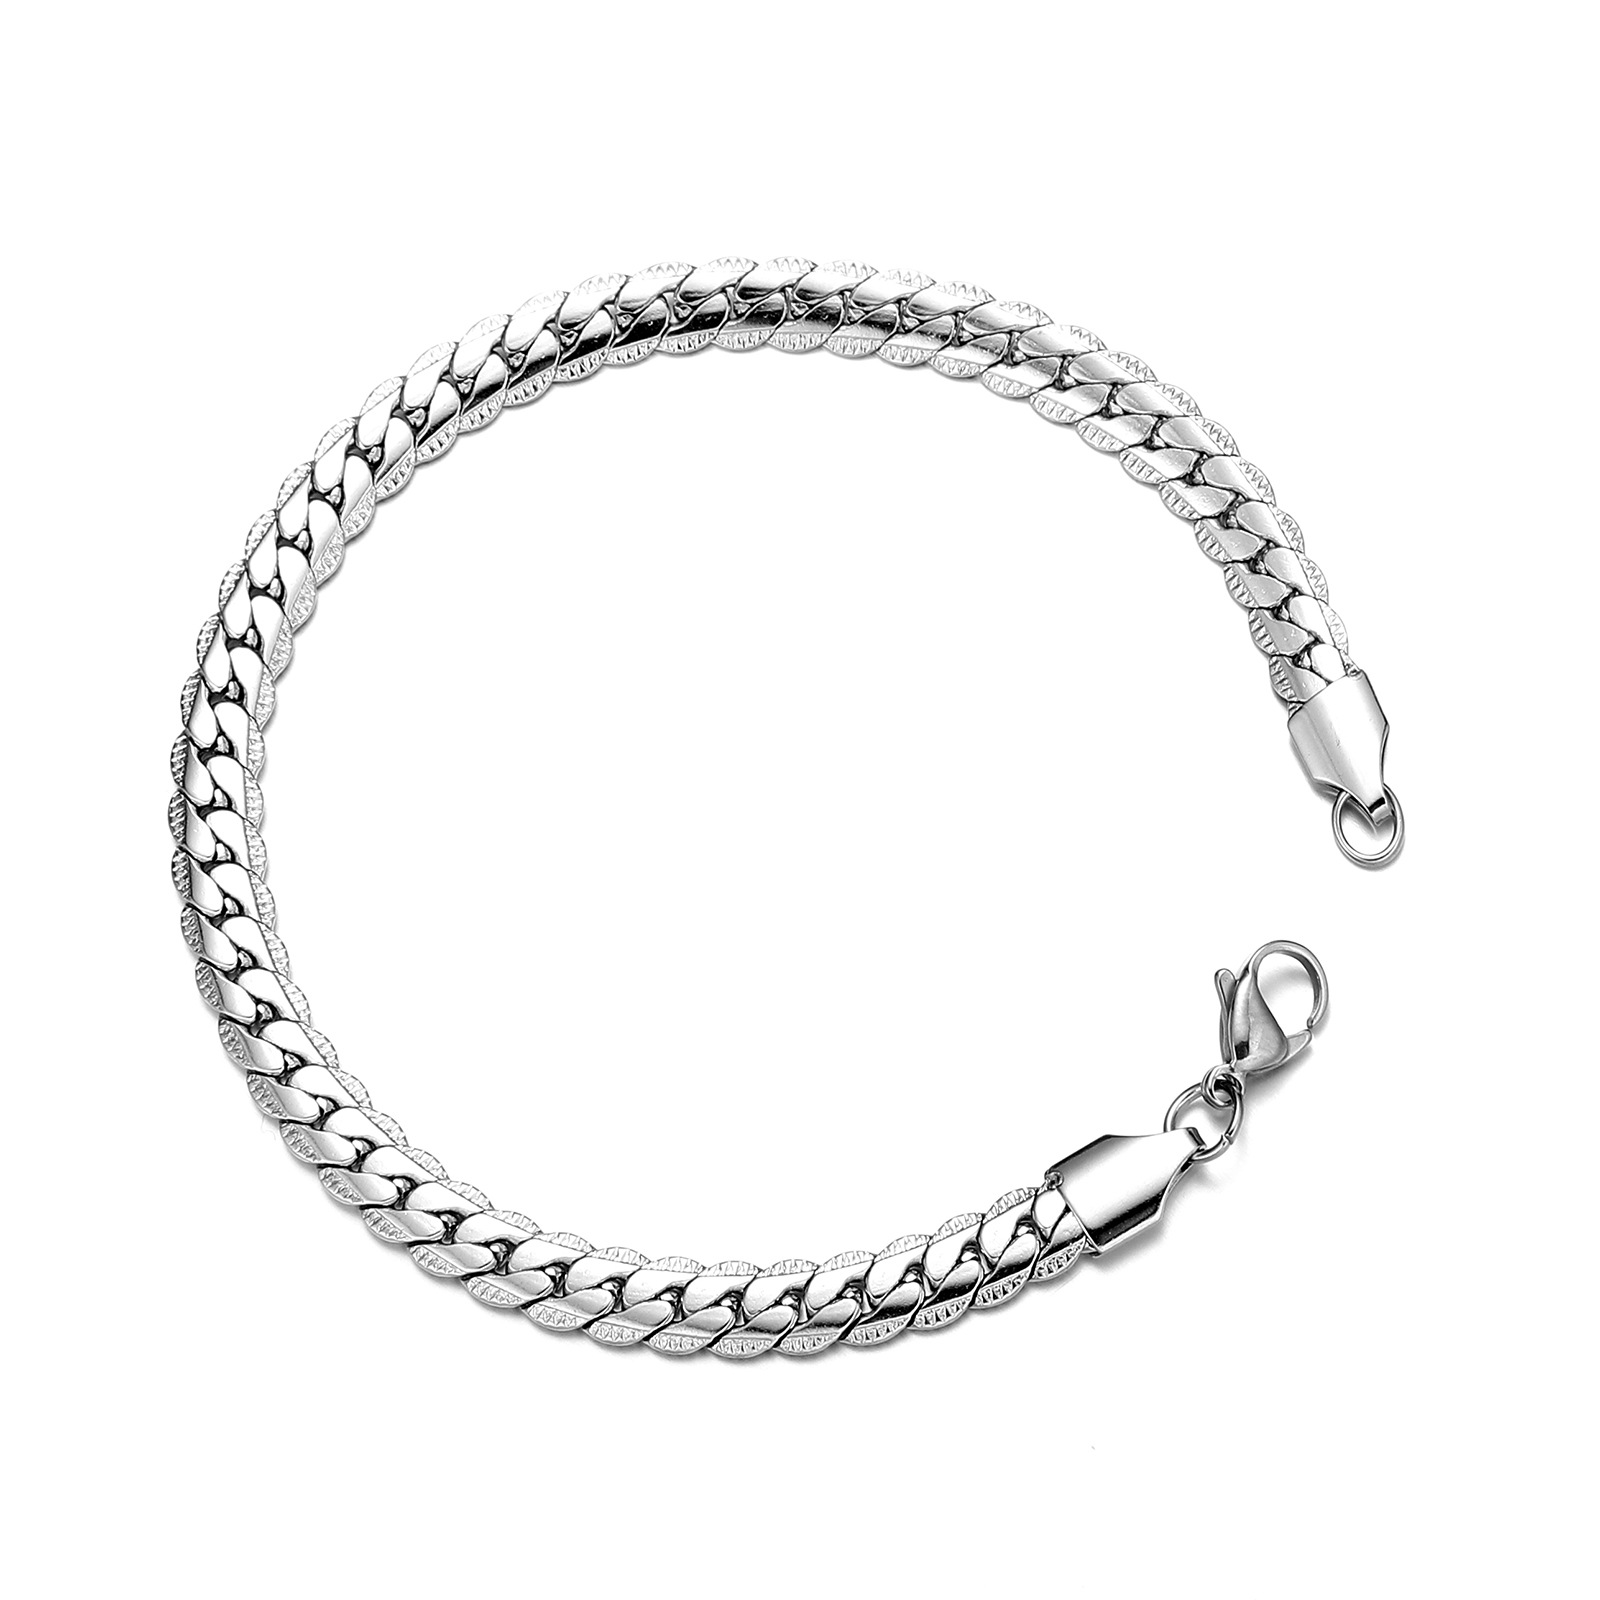 2:Silver bracelet (21cm long)